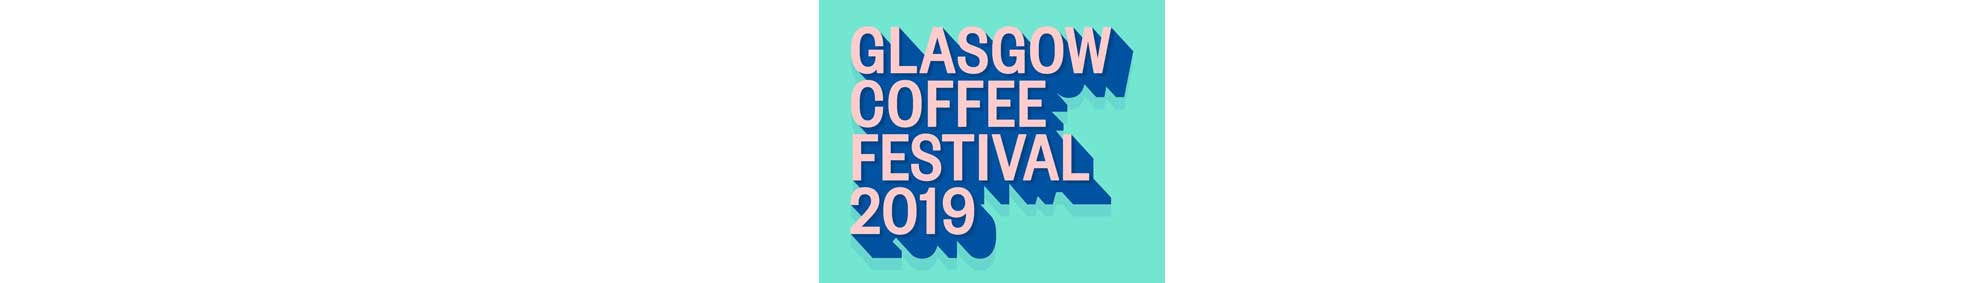 "How do you milk a pea?" a.k.a. Glasgow Coffee Festival 2019